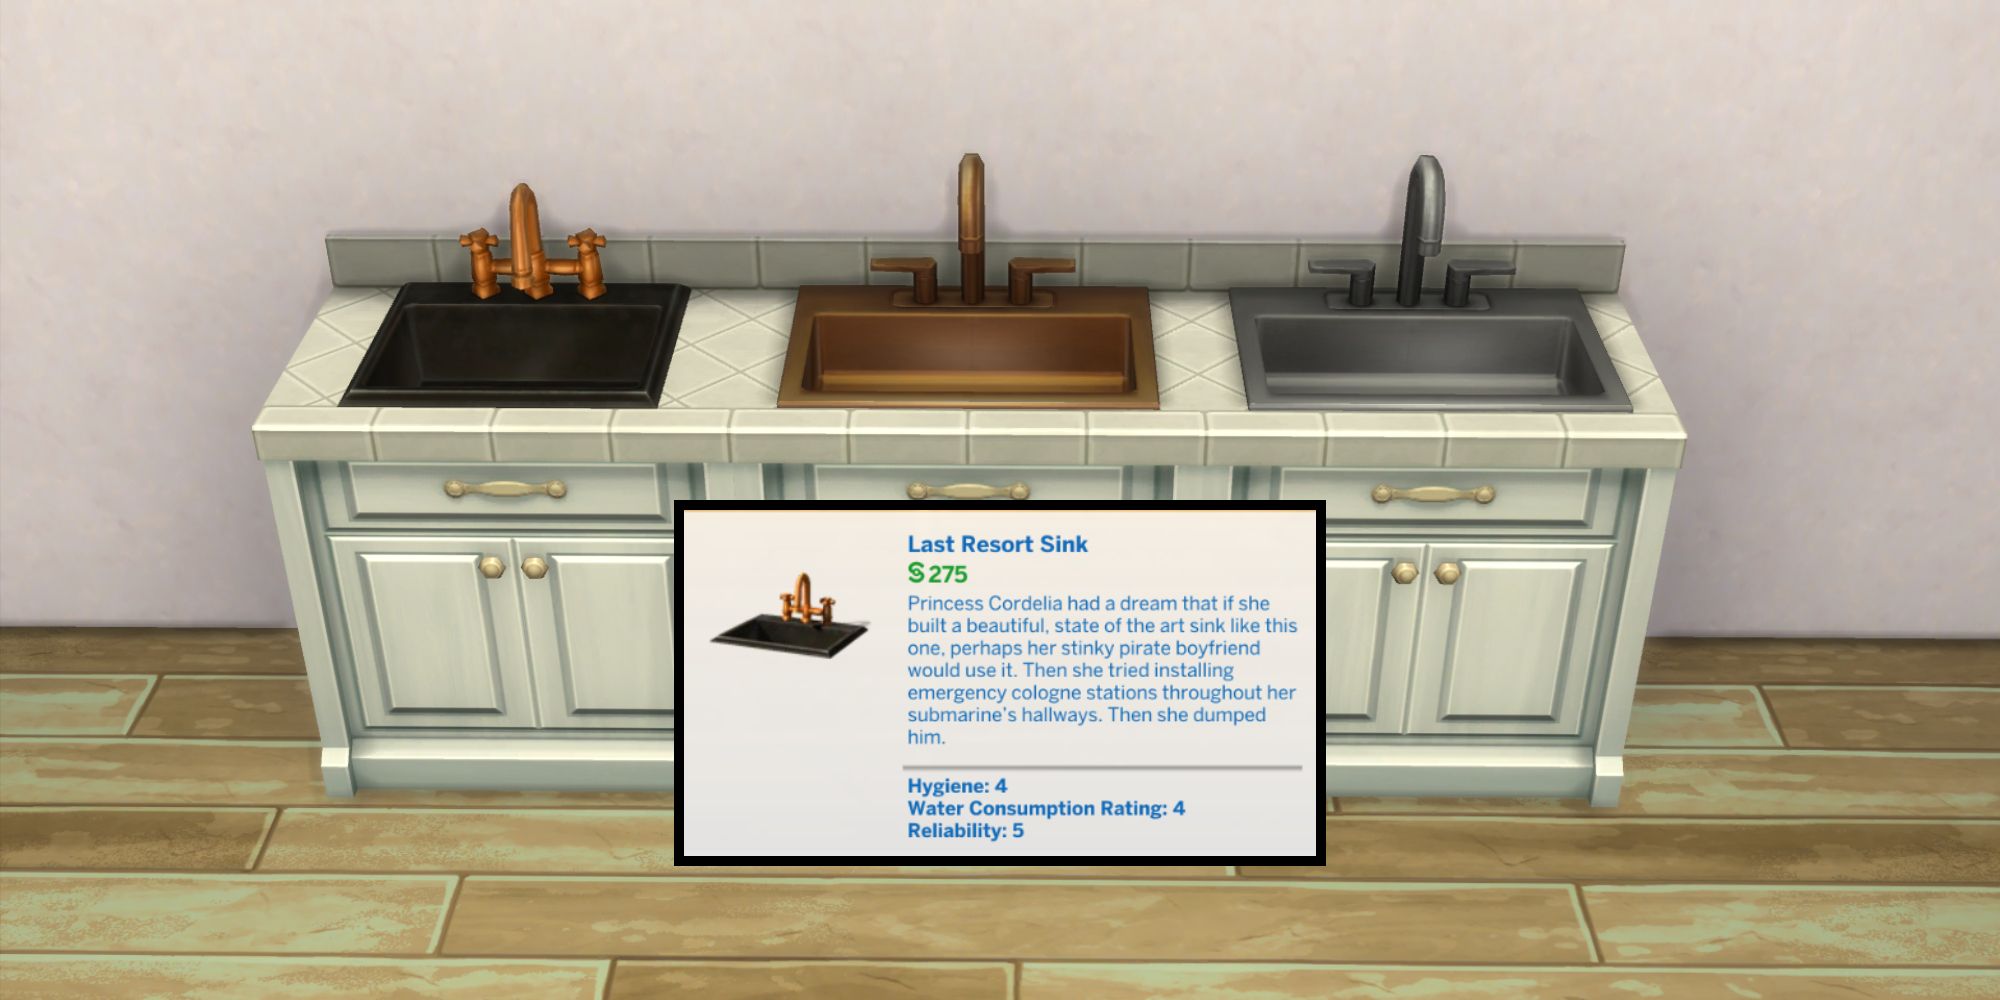 The Last Resort Sink has a funny description in build/buy mode